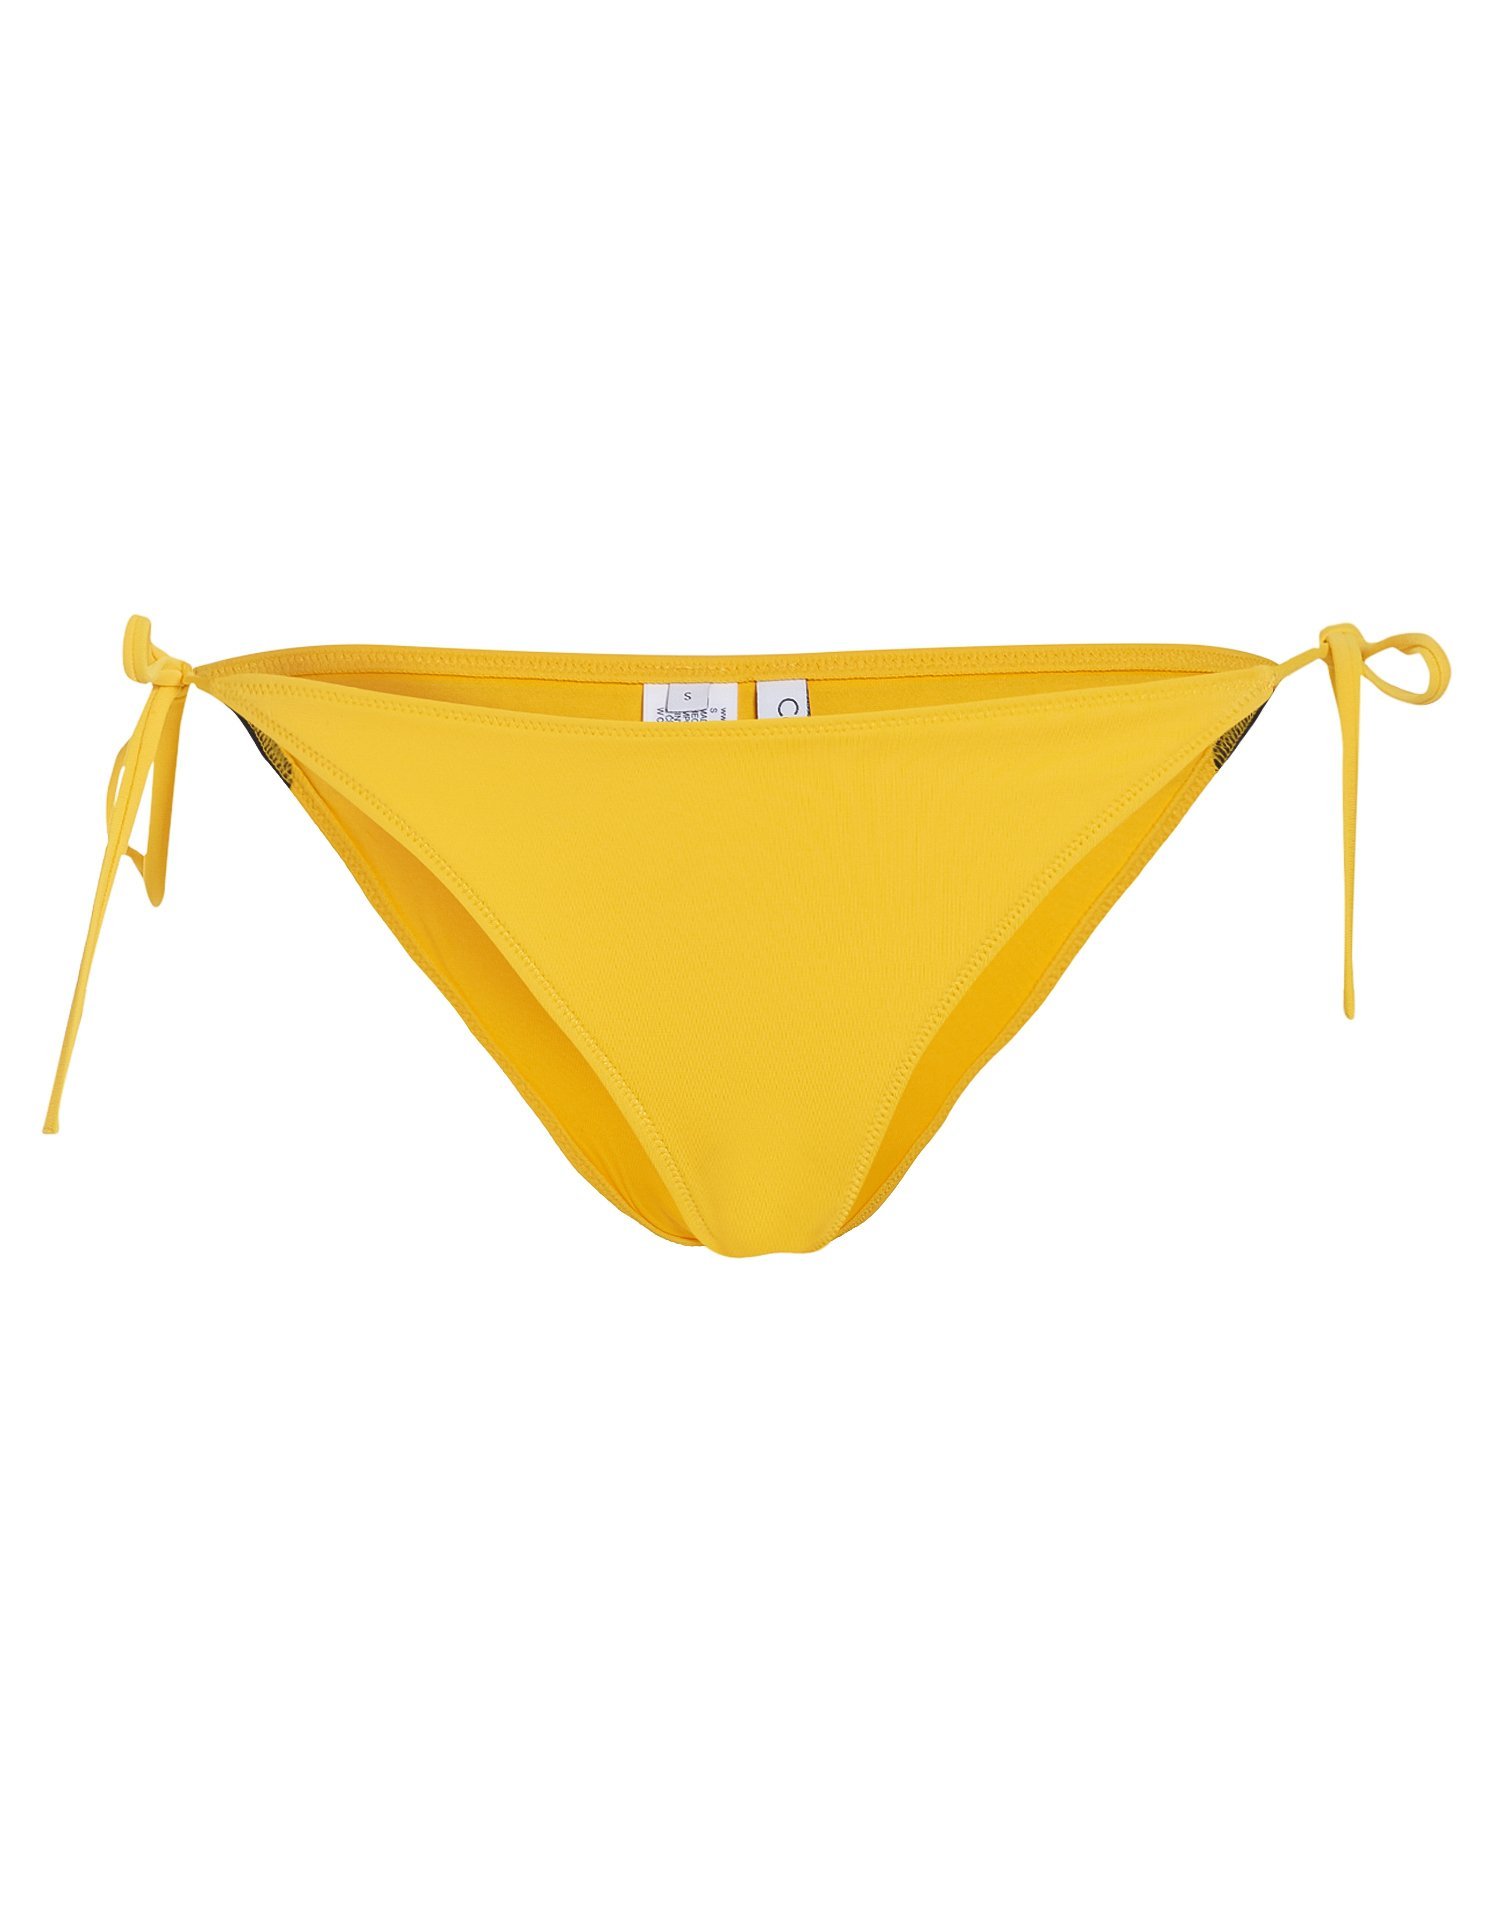 Cheeky String Side Tie Bikini - Calvin Klein Underwear - Lemon ...